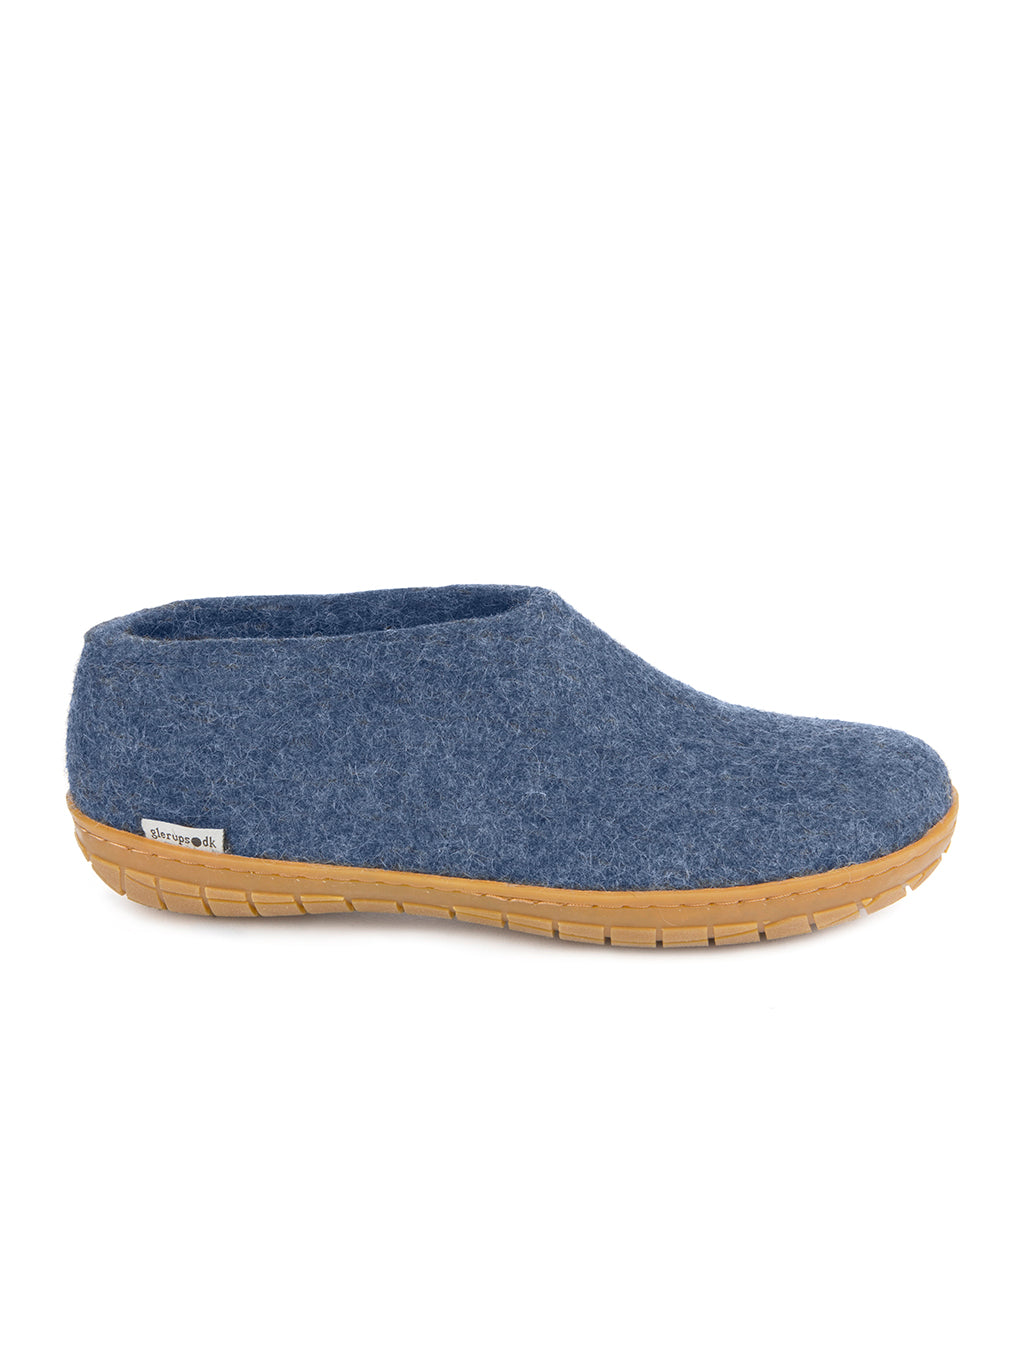 Denim blue wool shoe with rubber sole